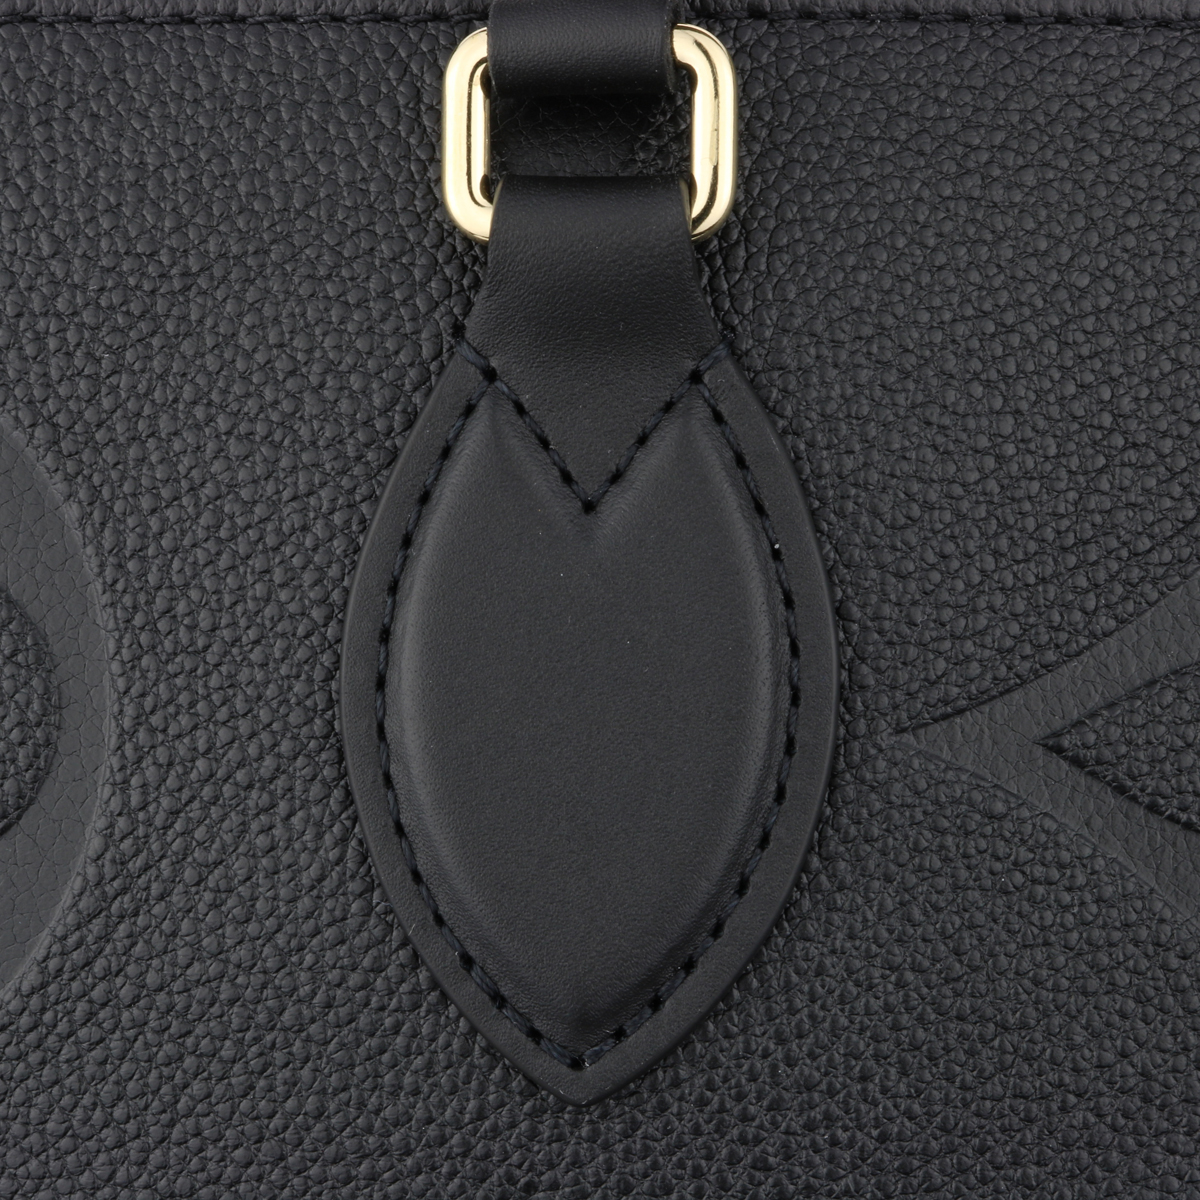 Louis Vuitton, Bags, Black Louis Vuitton Empreinte On The Go Bag